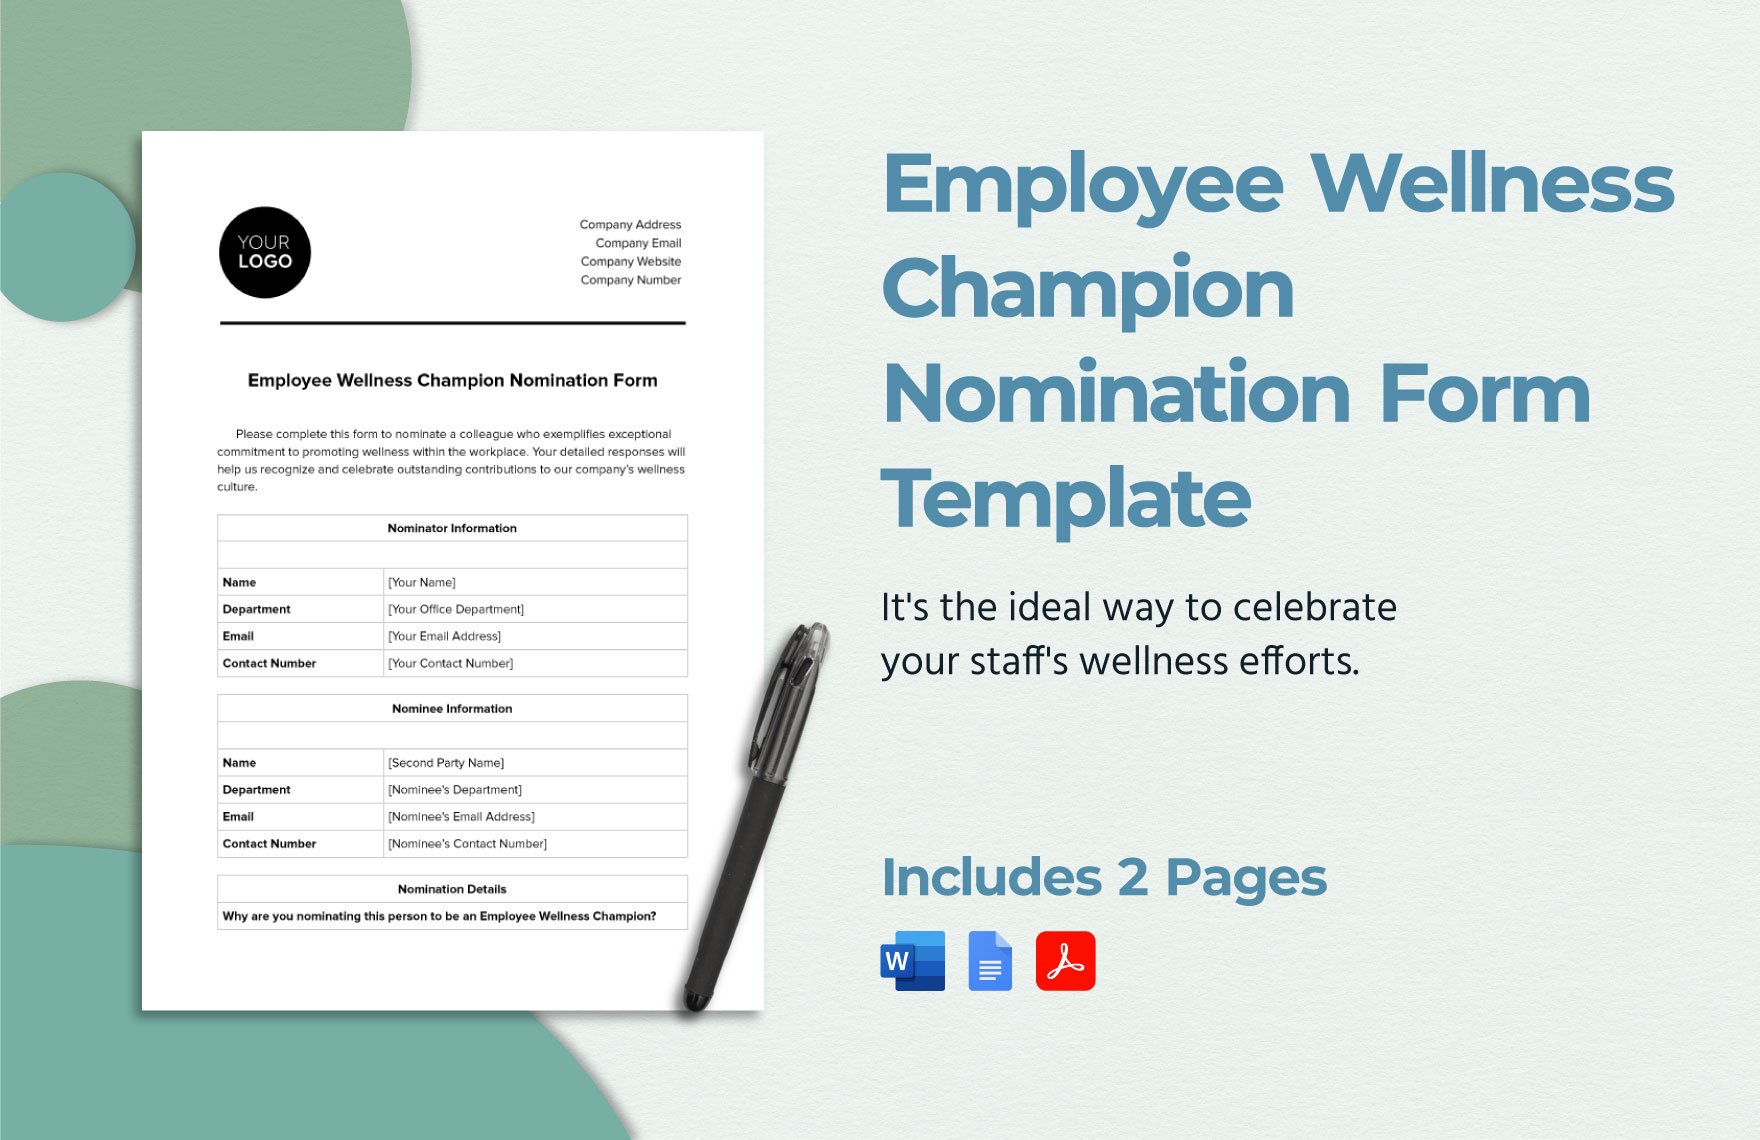 Employee Wellness Champion Nomination Form Template